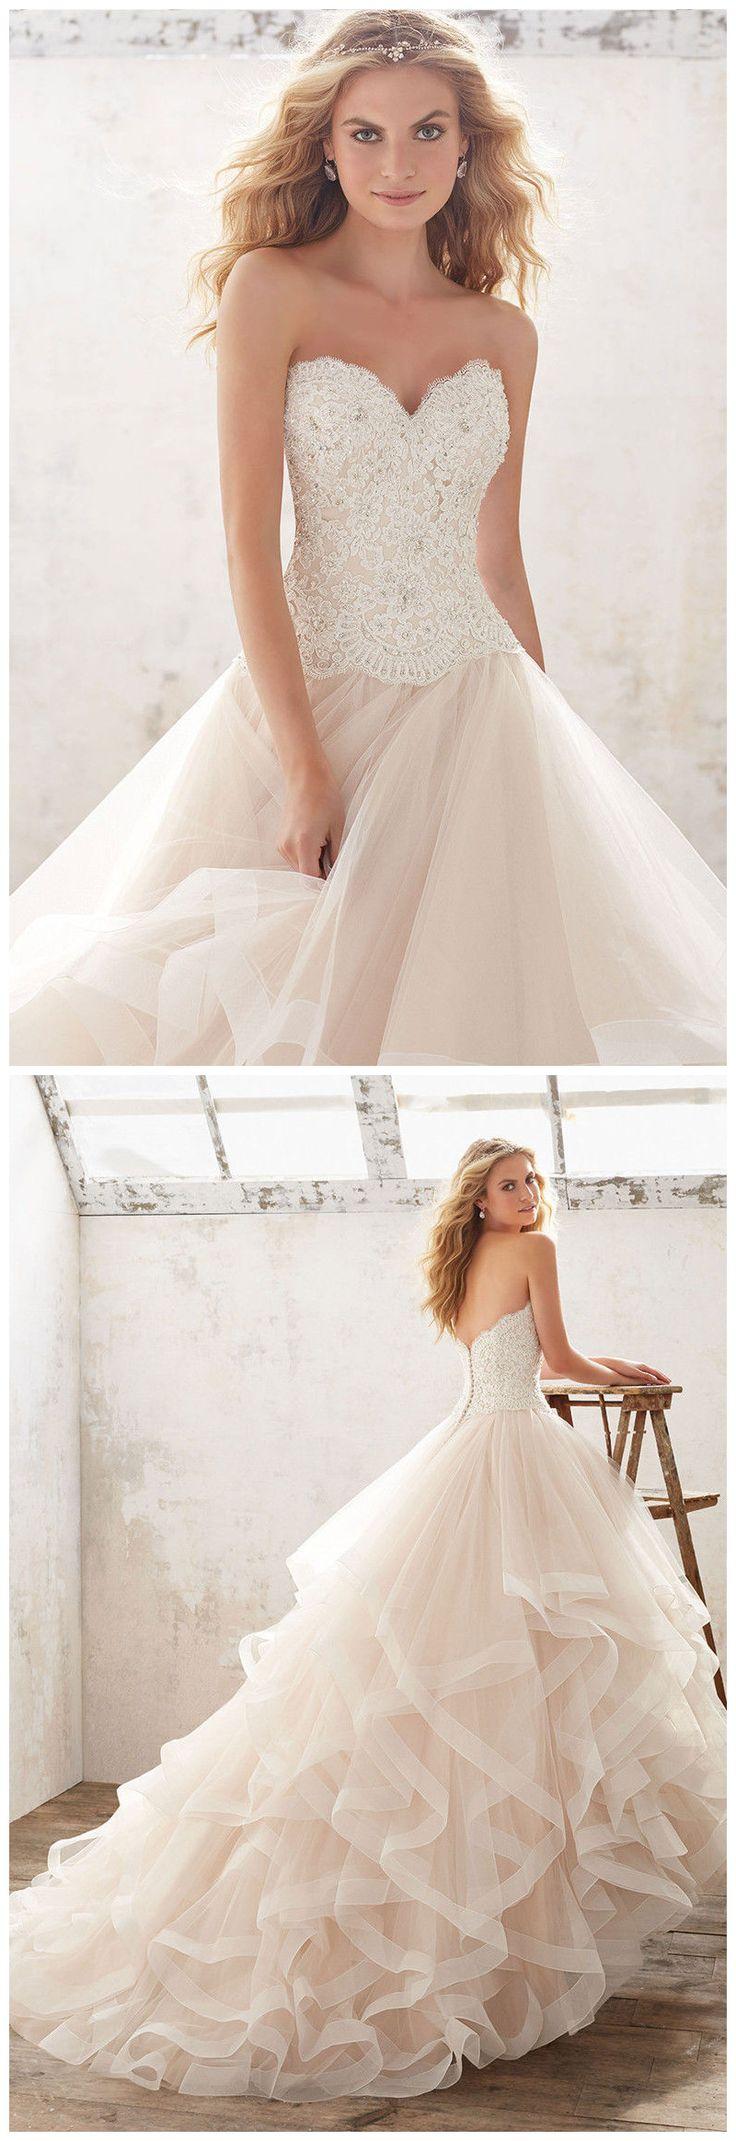 زفاف - New White Ivory Lace Bridal Gown Wedding Dress Size From Olesa Wedding Shop